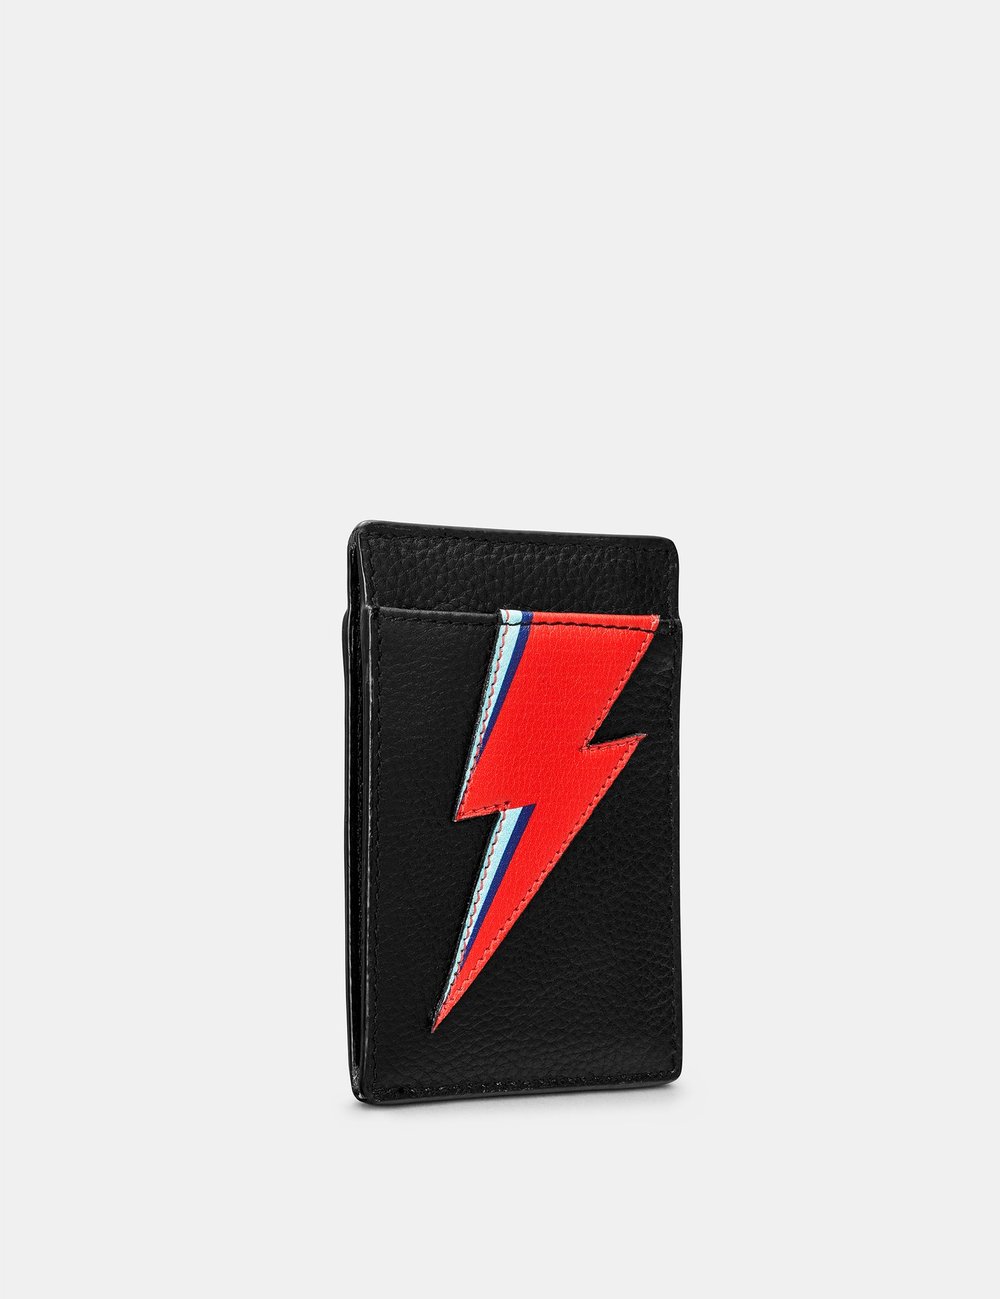 Lightning Bolt Compact Leather Card Holder